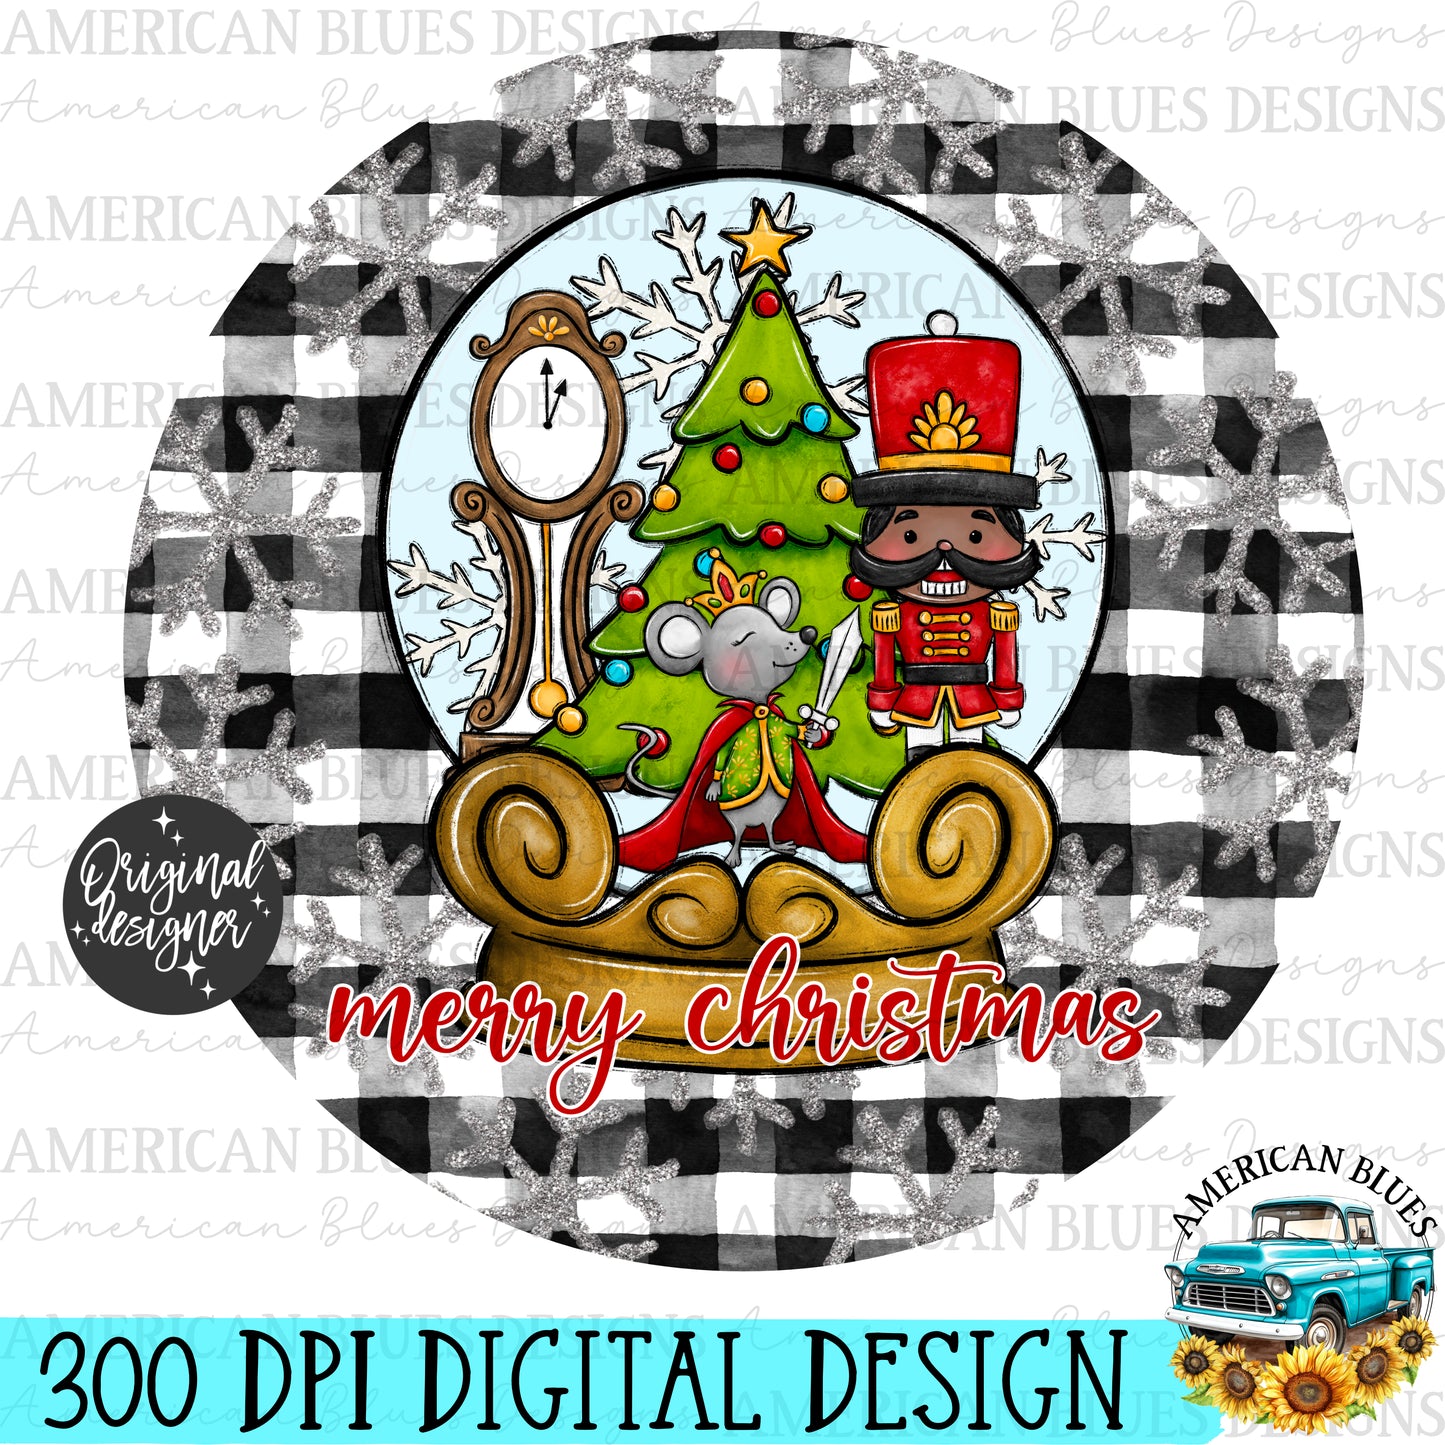 Merry Christmas Nutcracker door hanger digital design | American Blues Designs